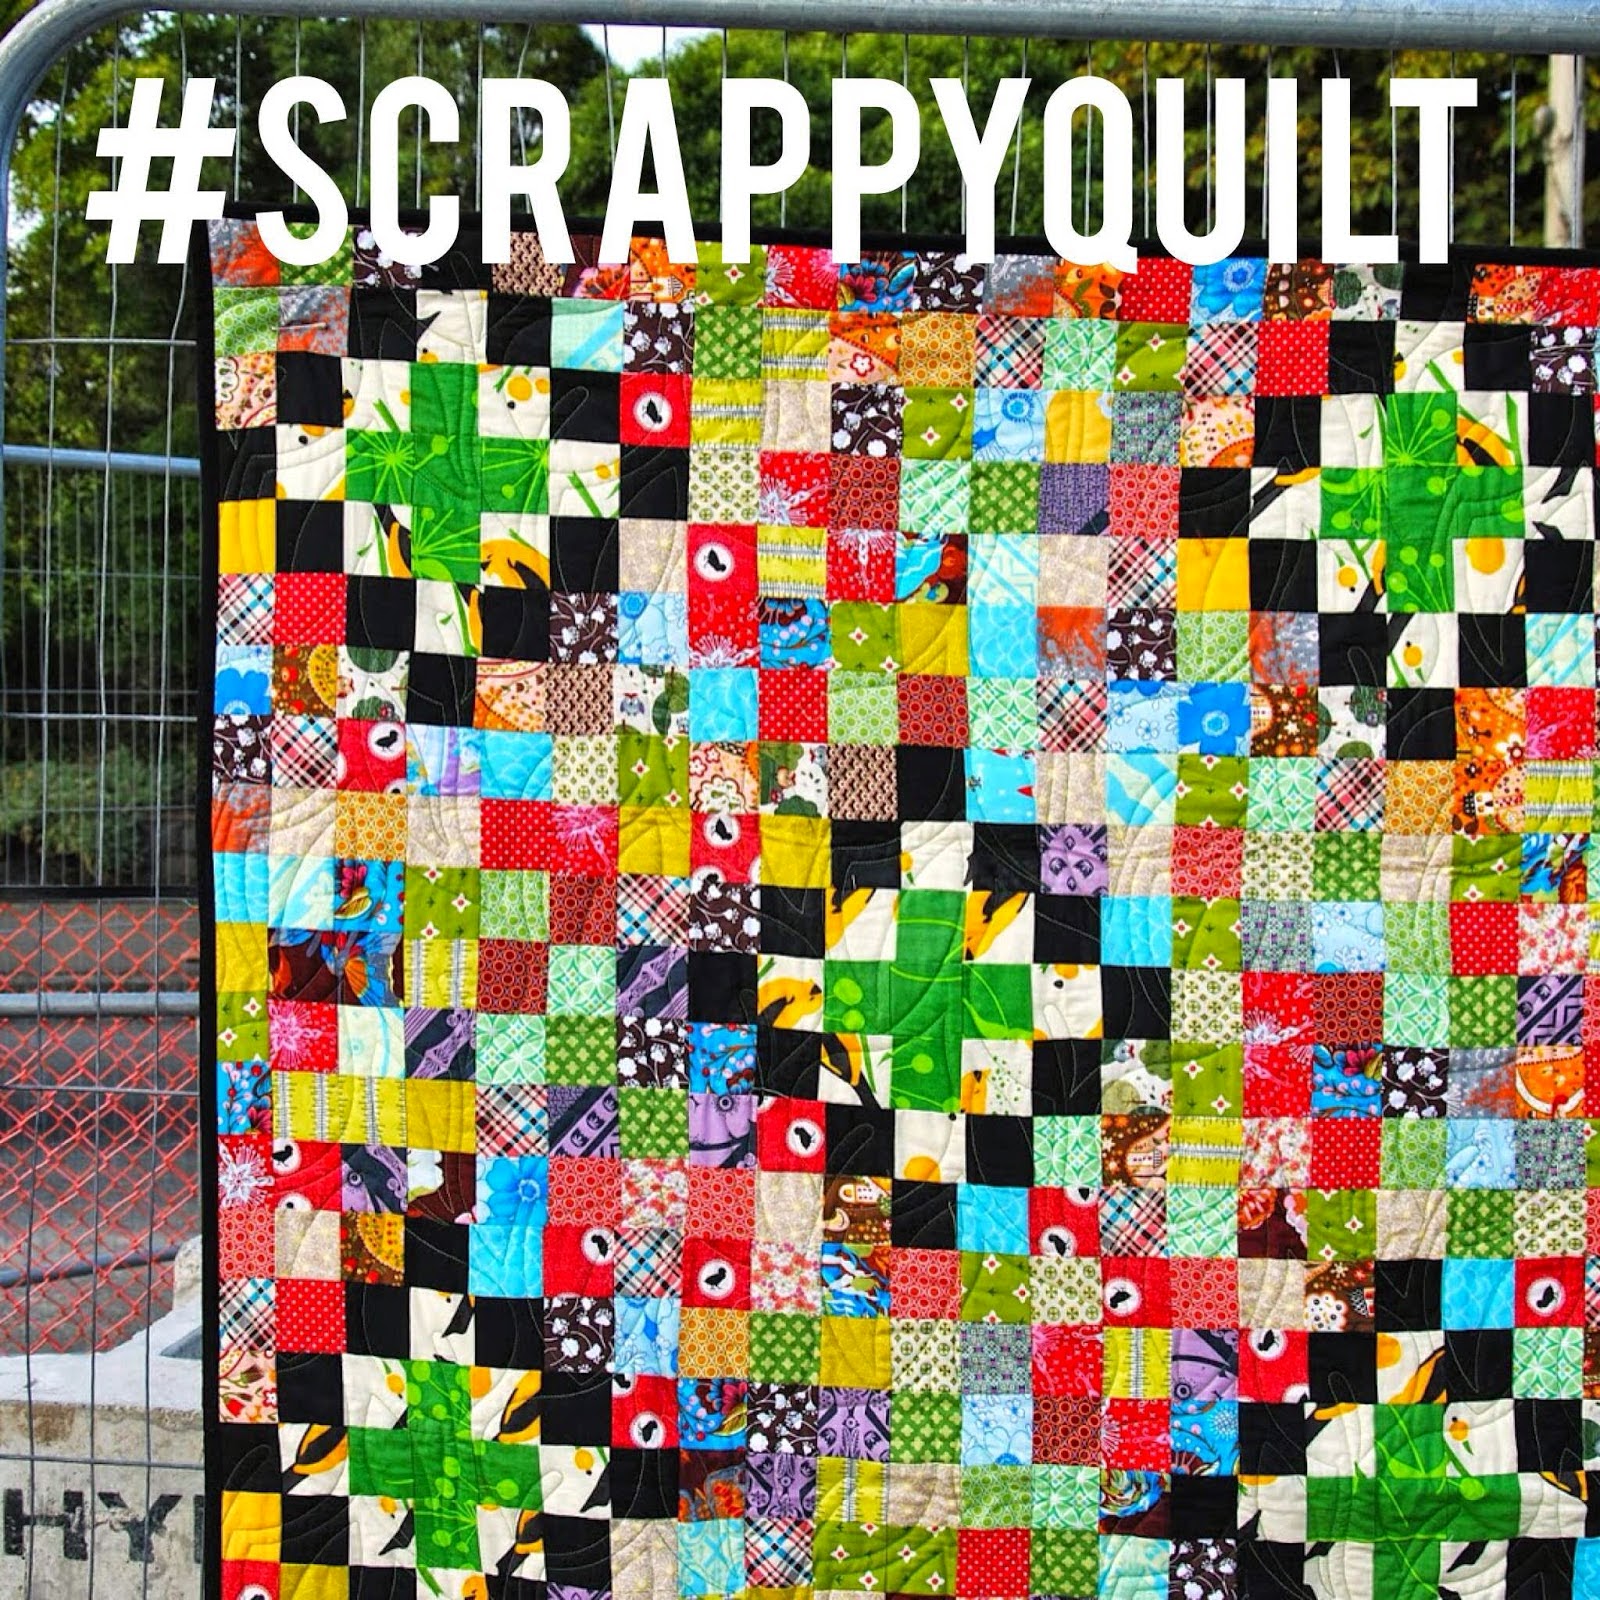 Scrappy Quilt